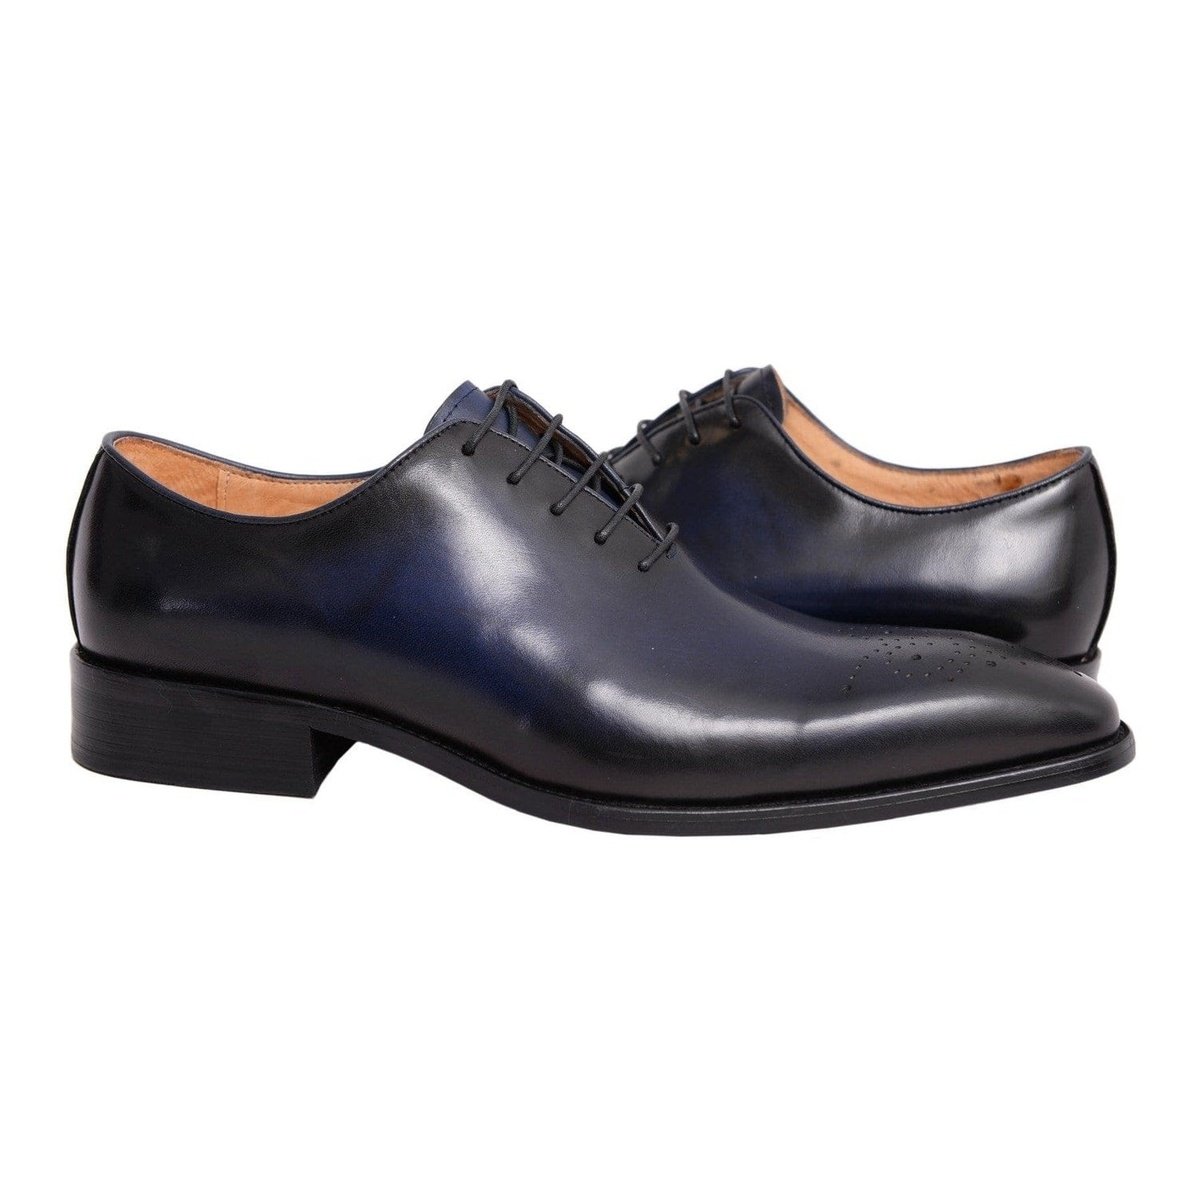 Carrucci SHOES Carrucci Solid Navy Blue Whole Cut Oxford Leather Dress Shoes